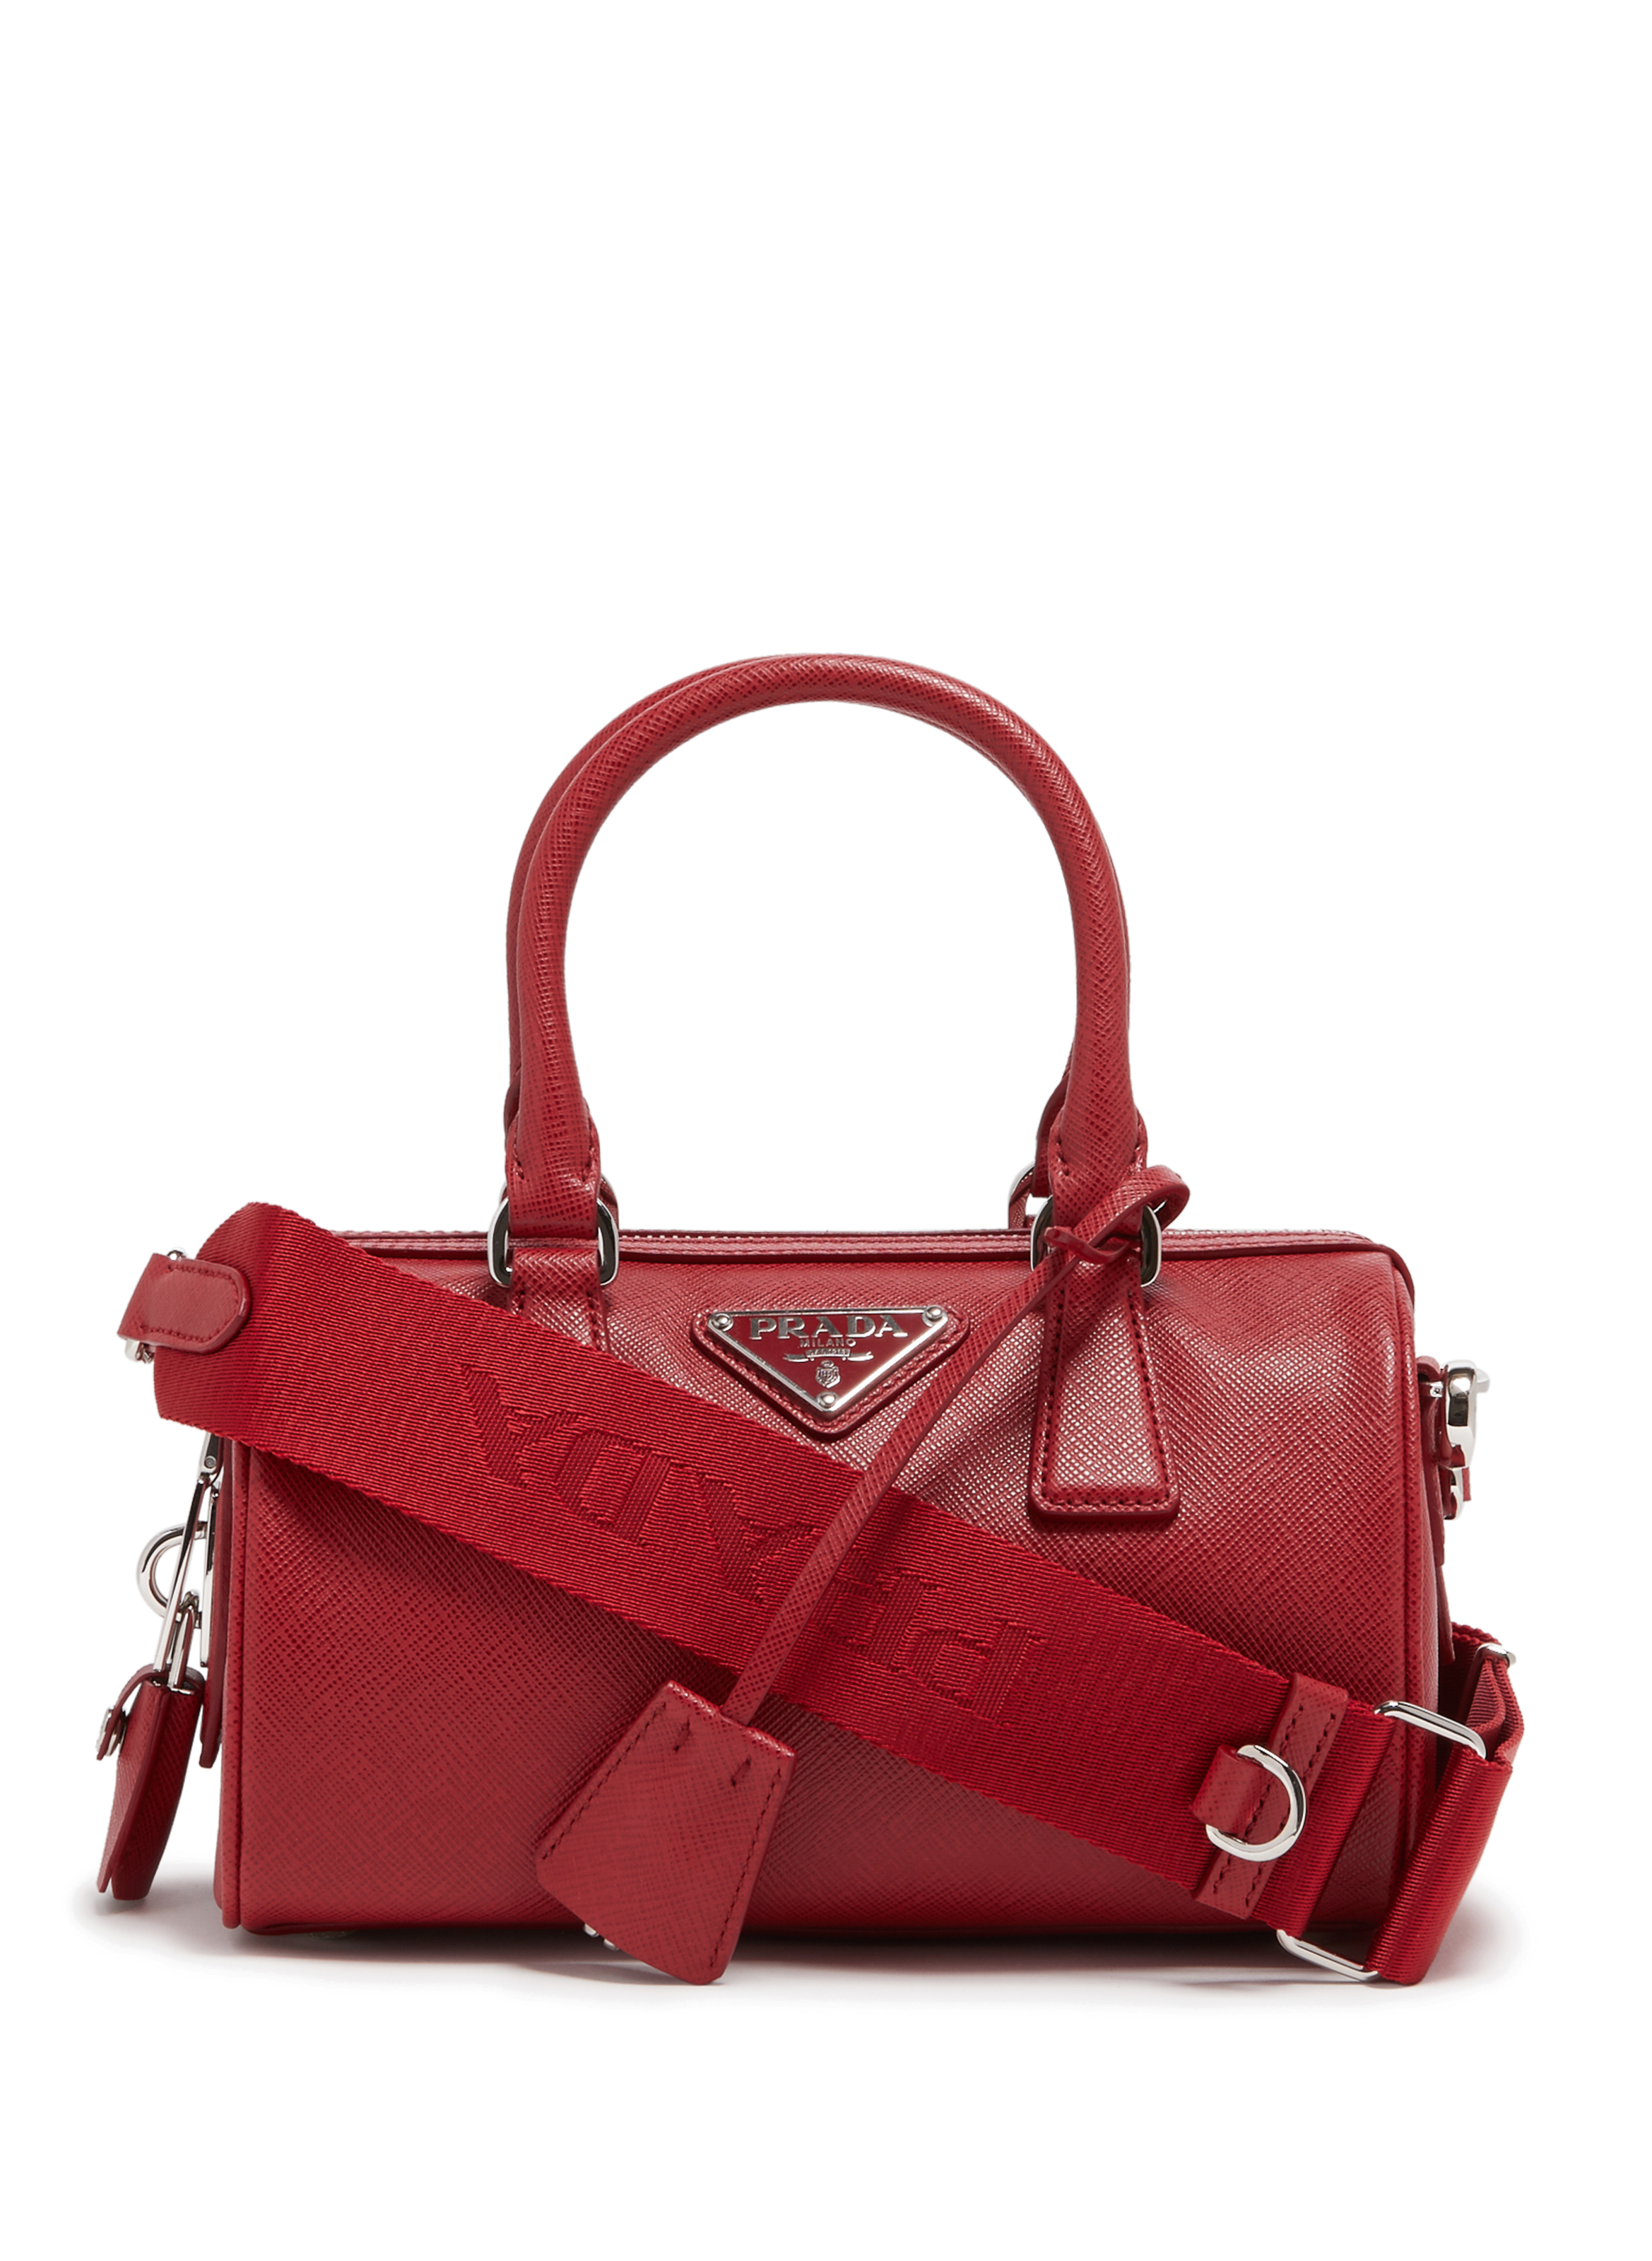 Prada | Galleria Saffiano Leather Bag | Women's Purses